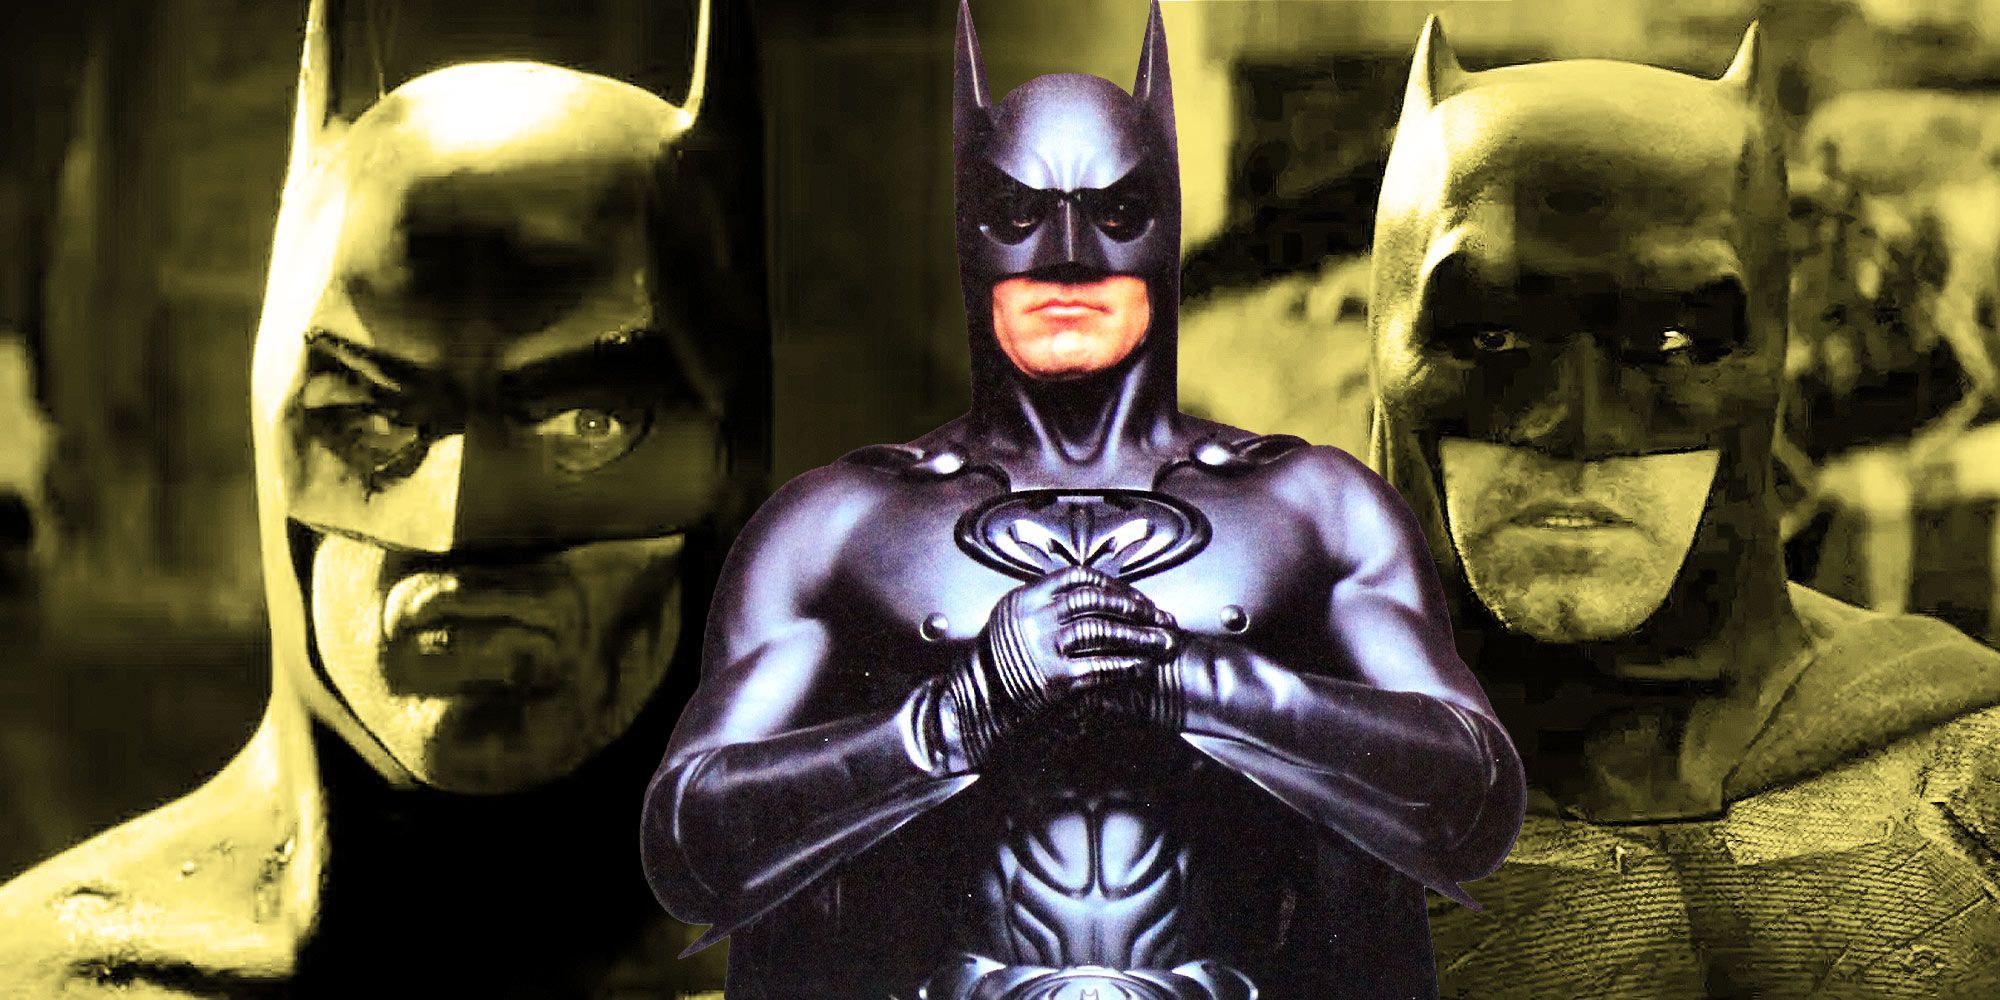 George Clooney Declares Himself The Best Batman In Funny Video